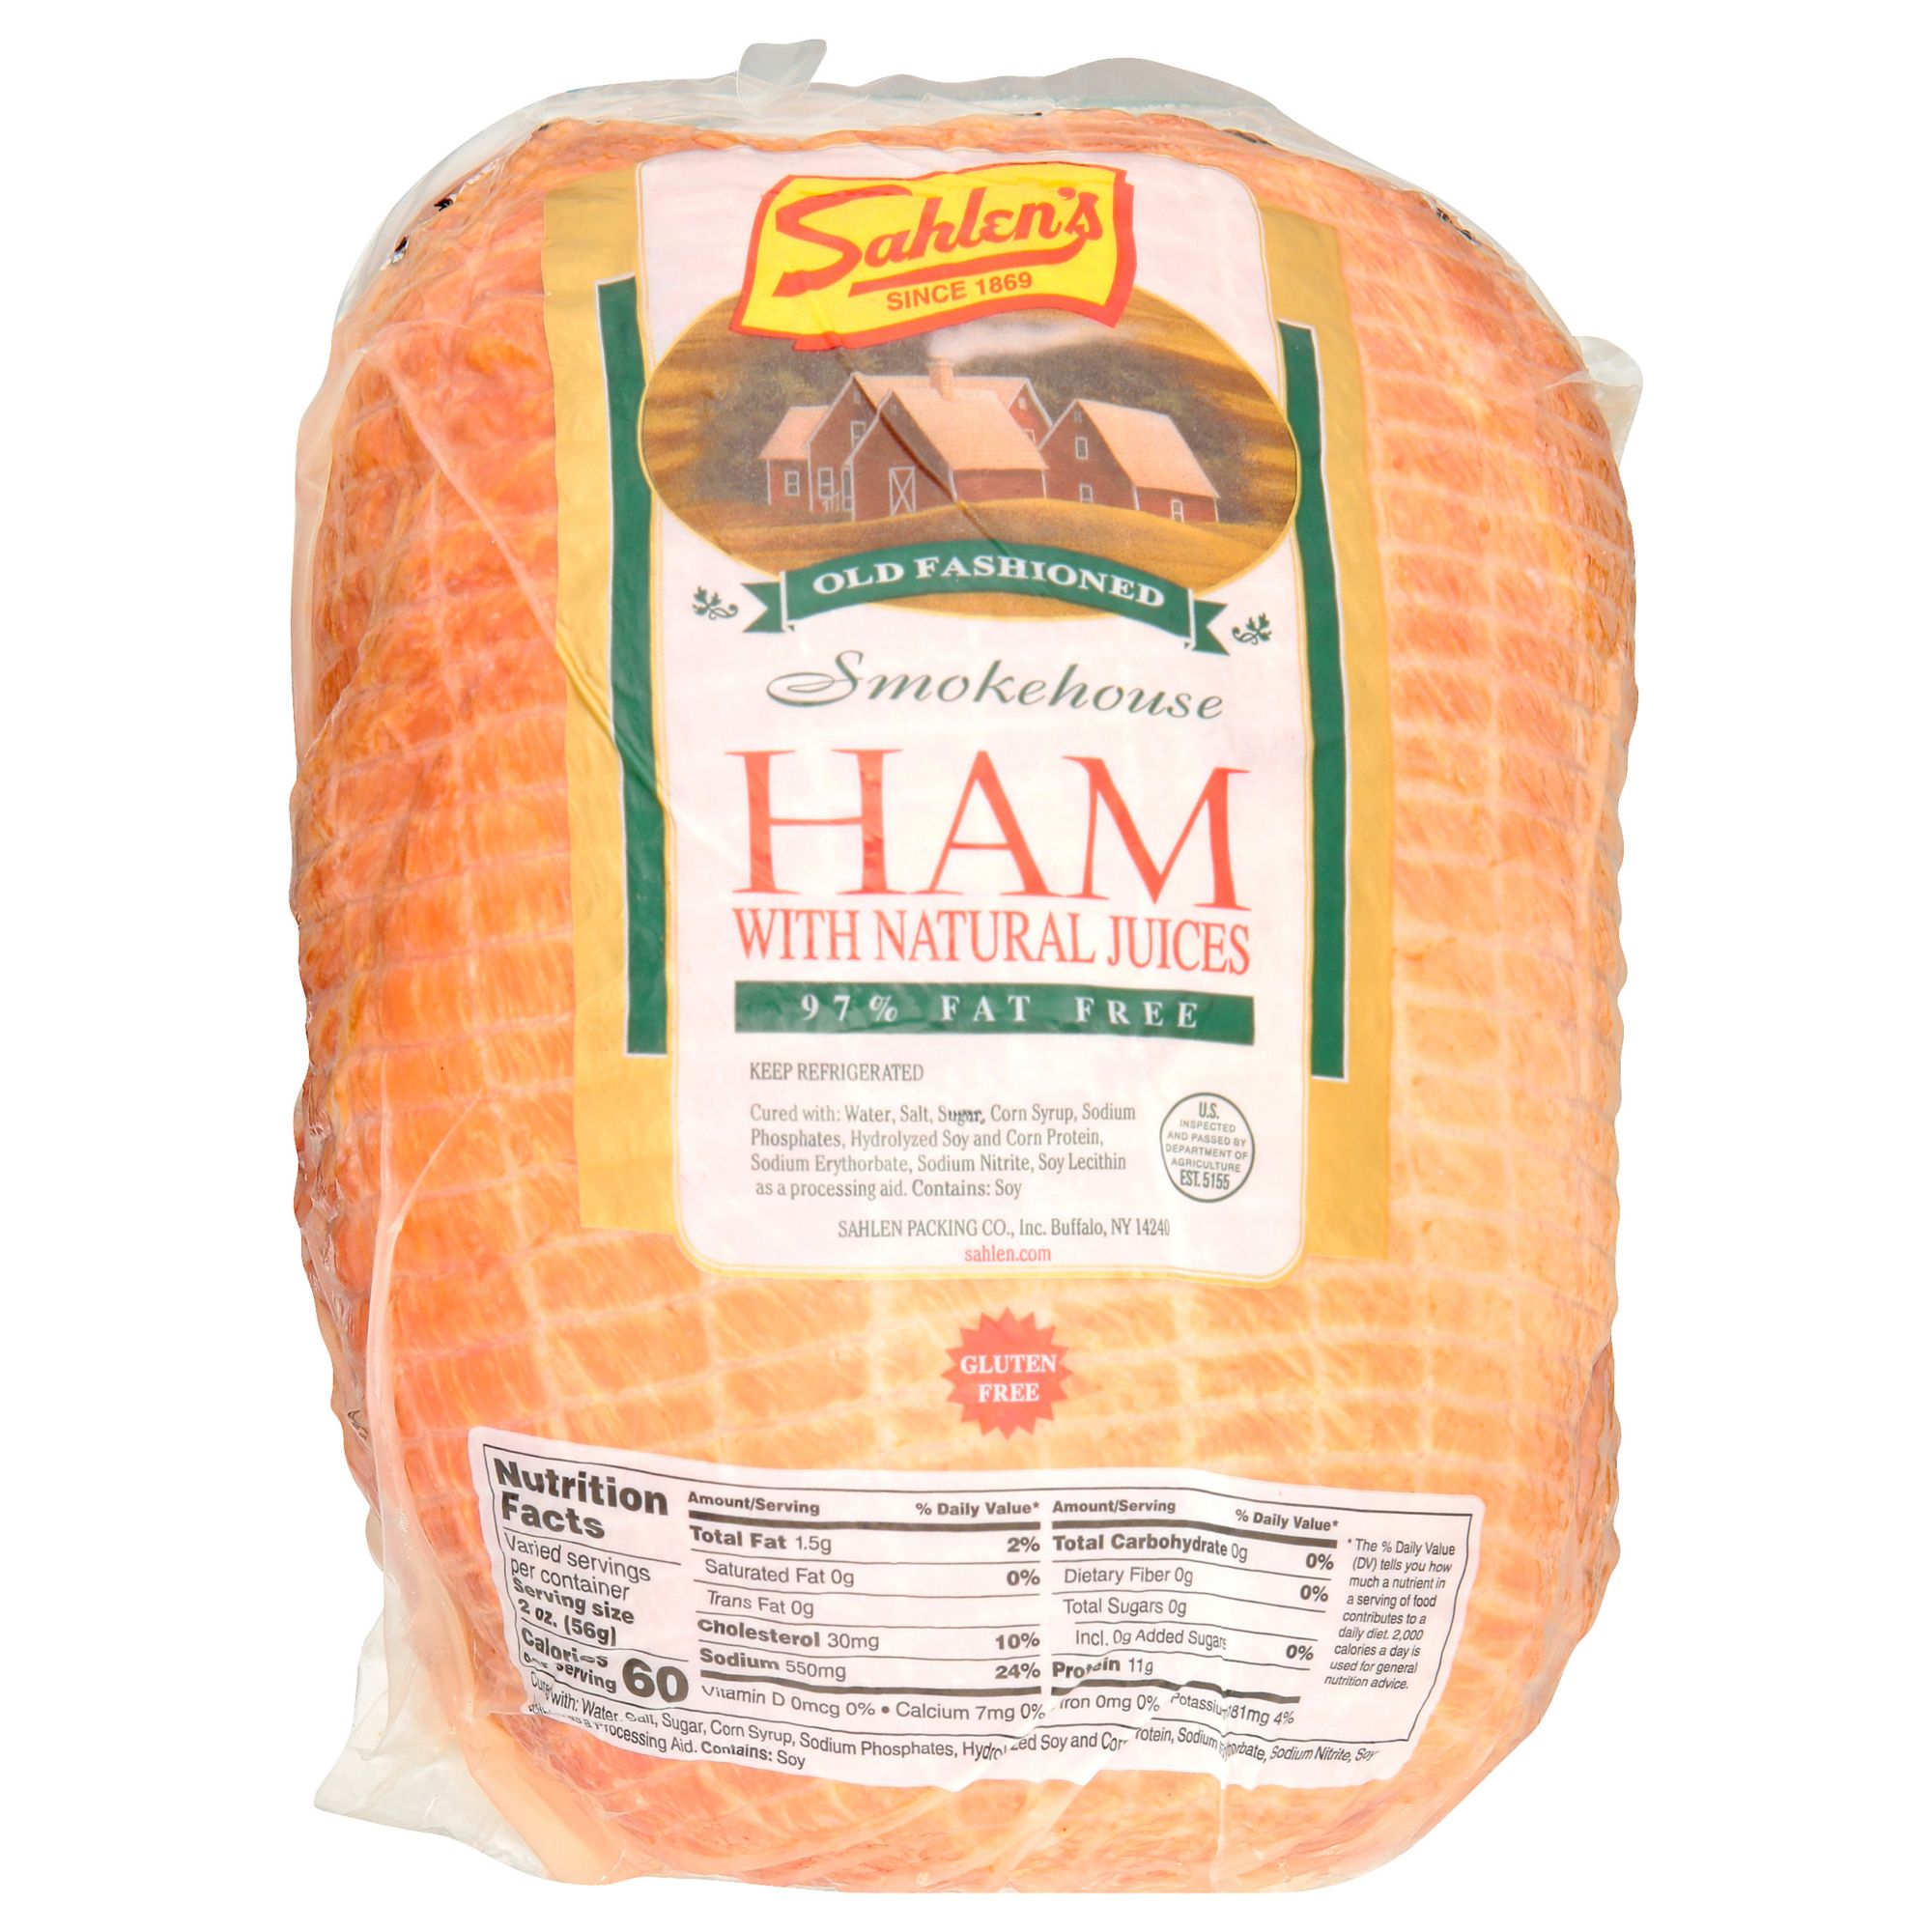 Smokehouse Ham, 0.75-1.5 lb Standard Cut